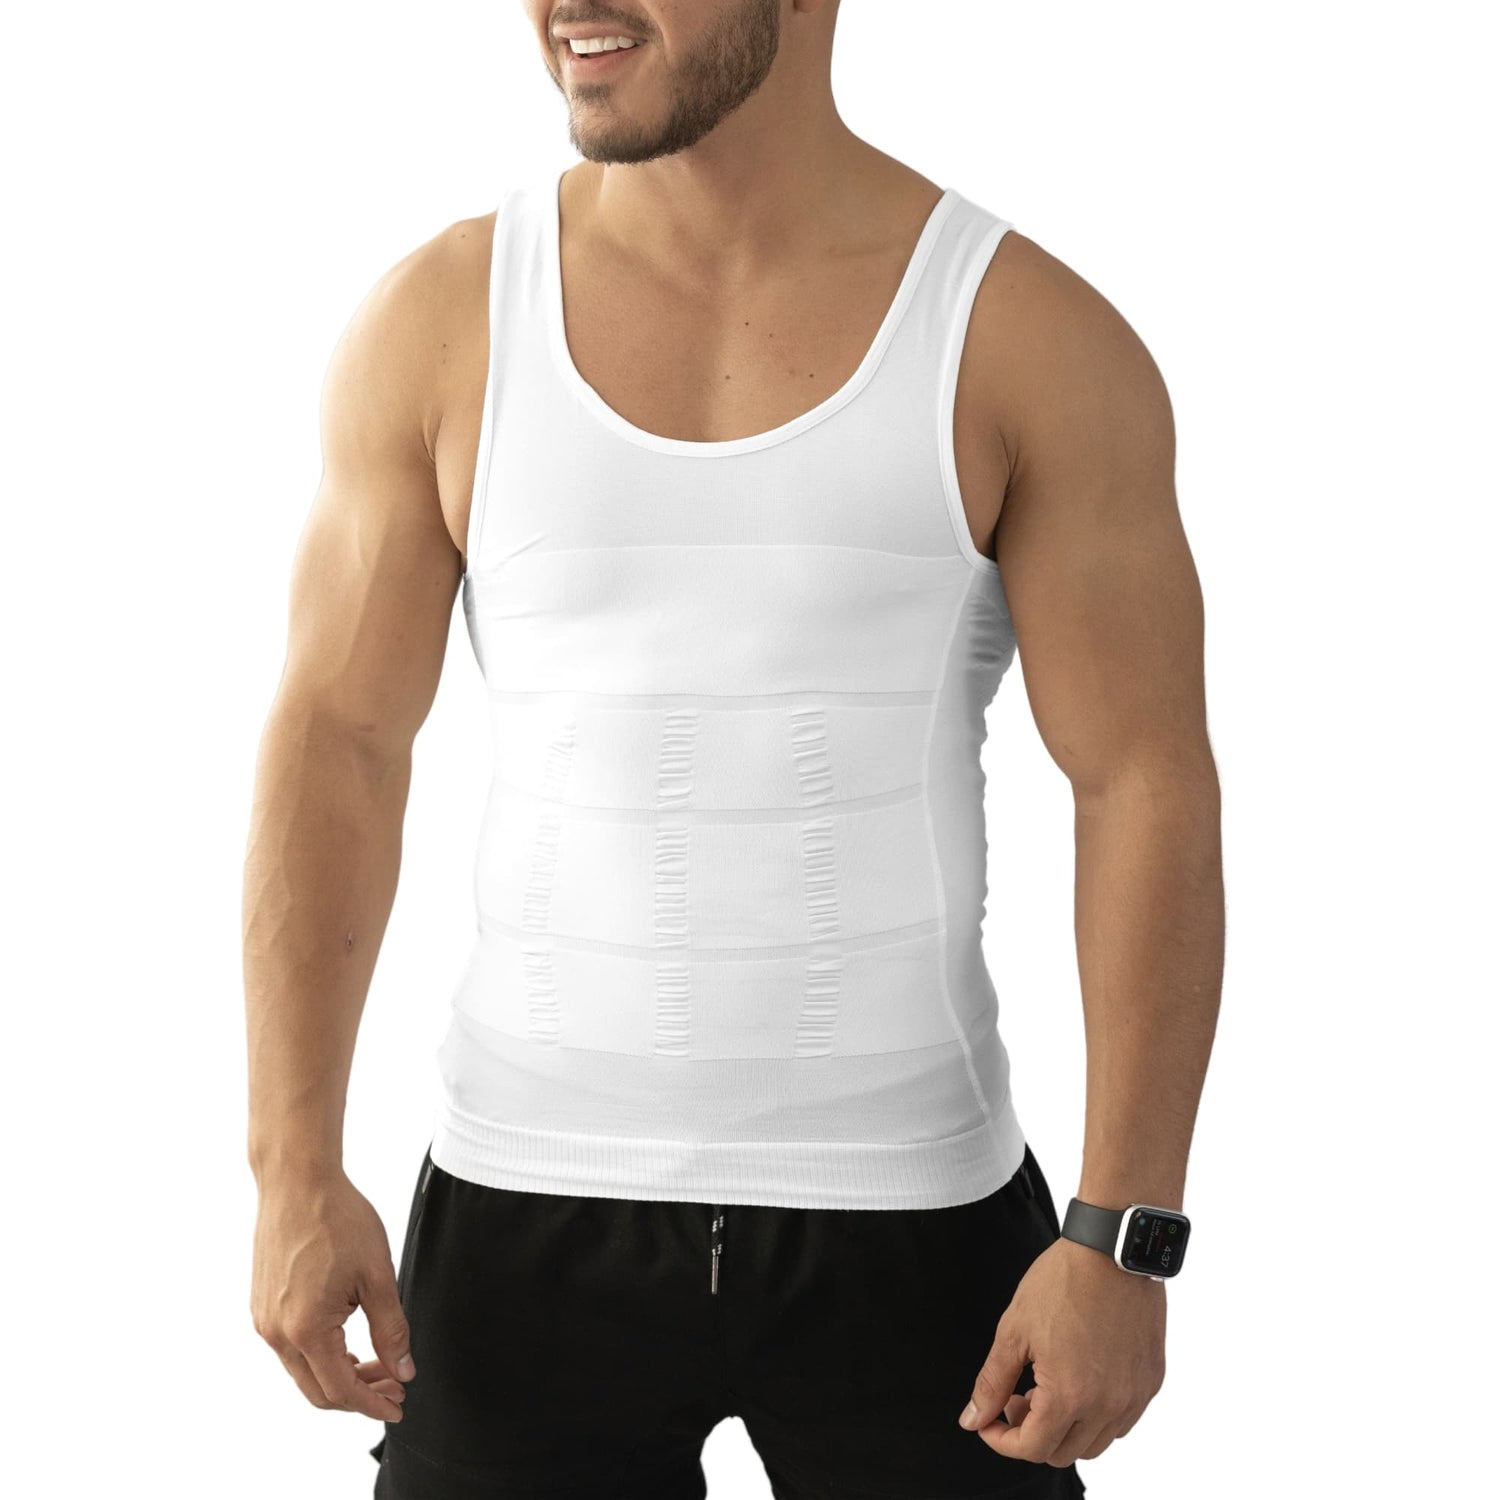 Gotoly Mens Compression Shirts Slimming Body Shaper Vest, 60% OFF